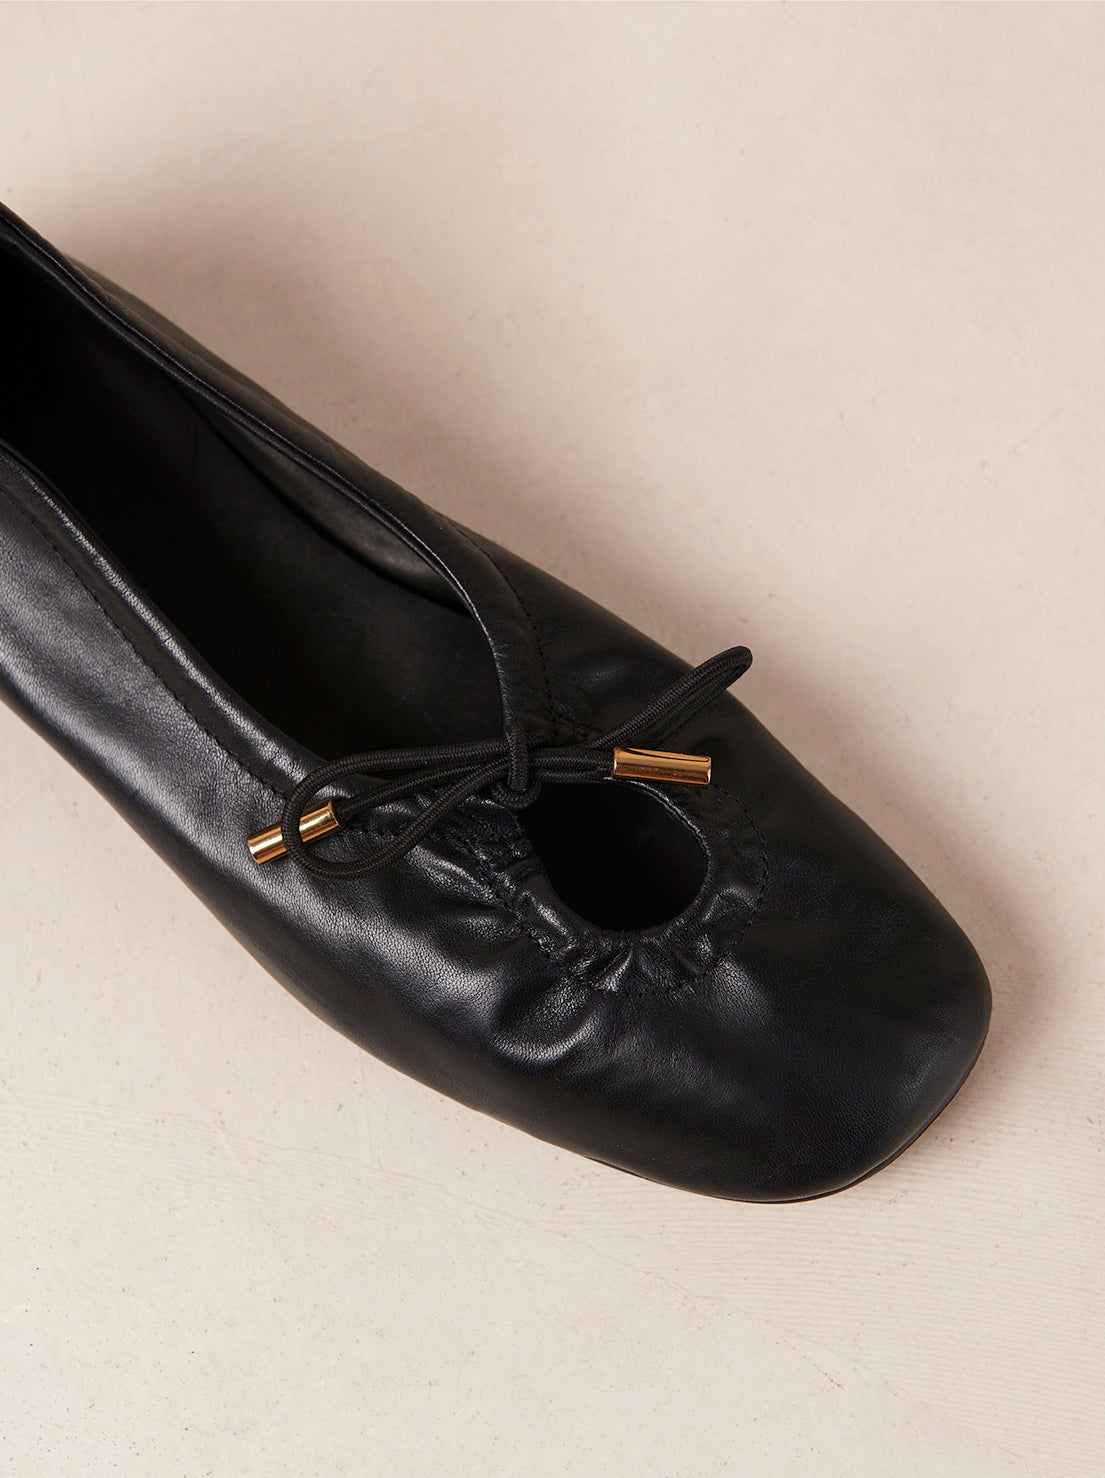 Alohas - Rosalind Ballet Flats - Black Leather